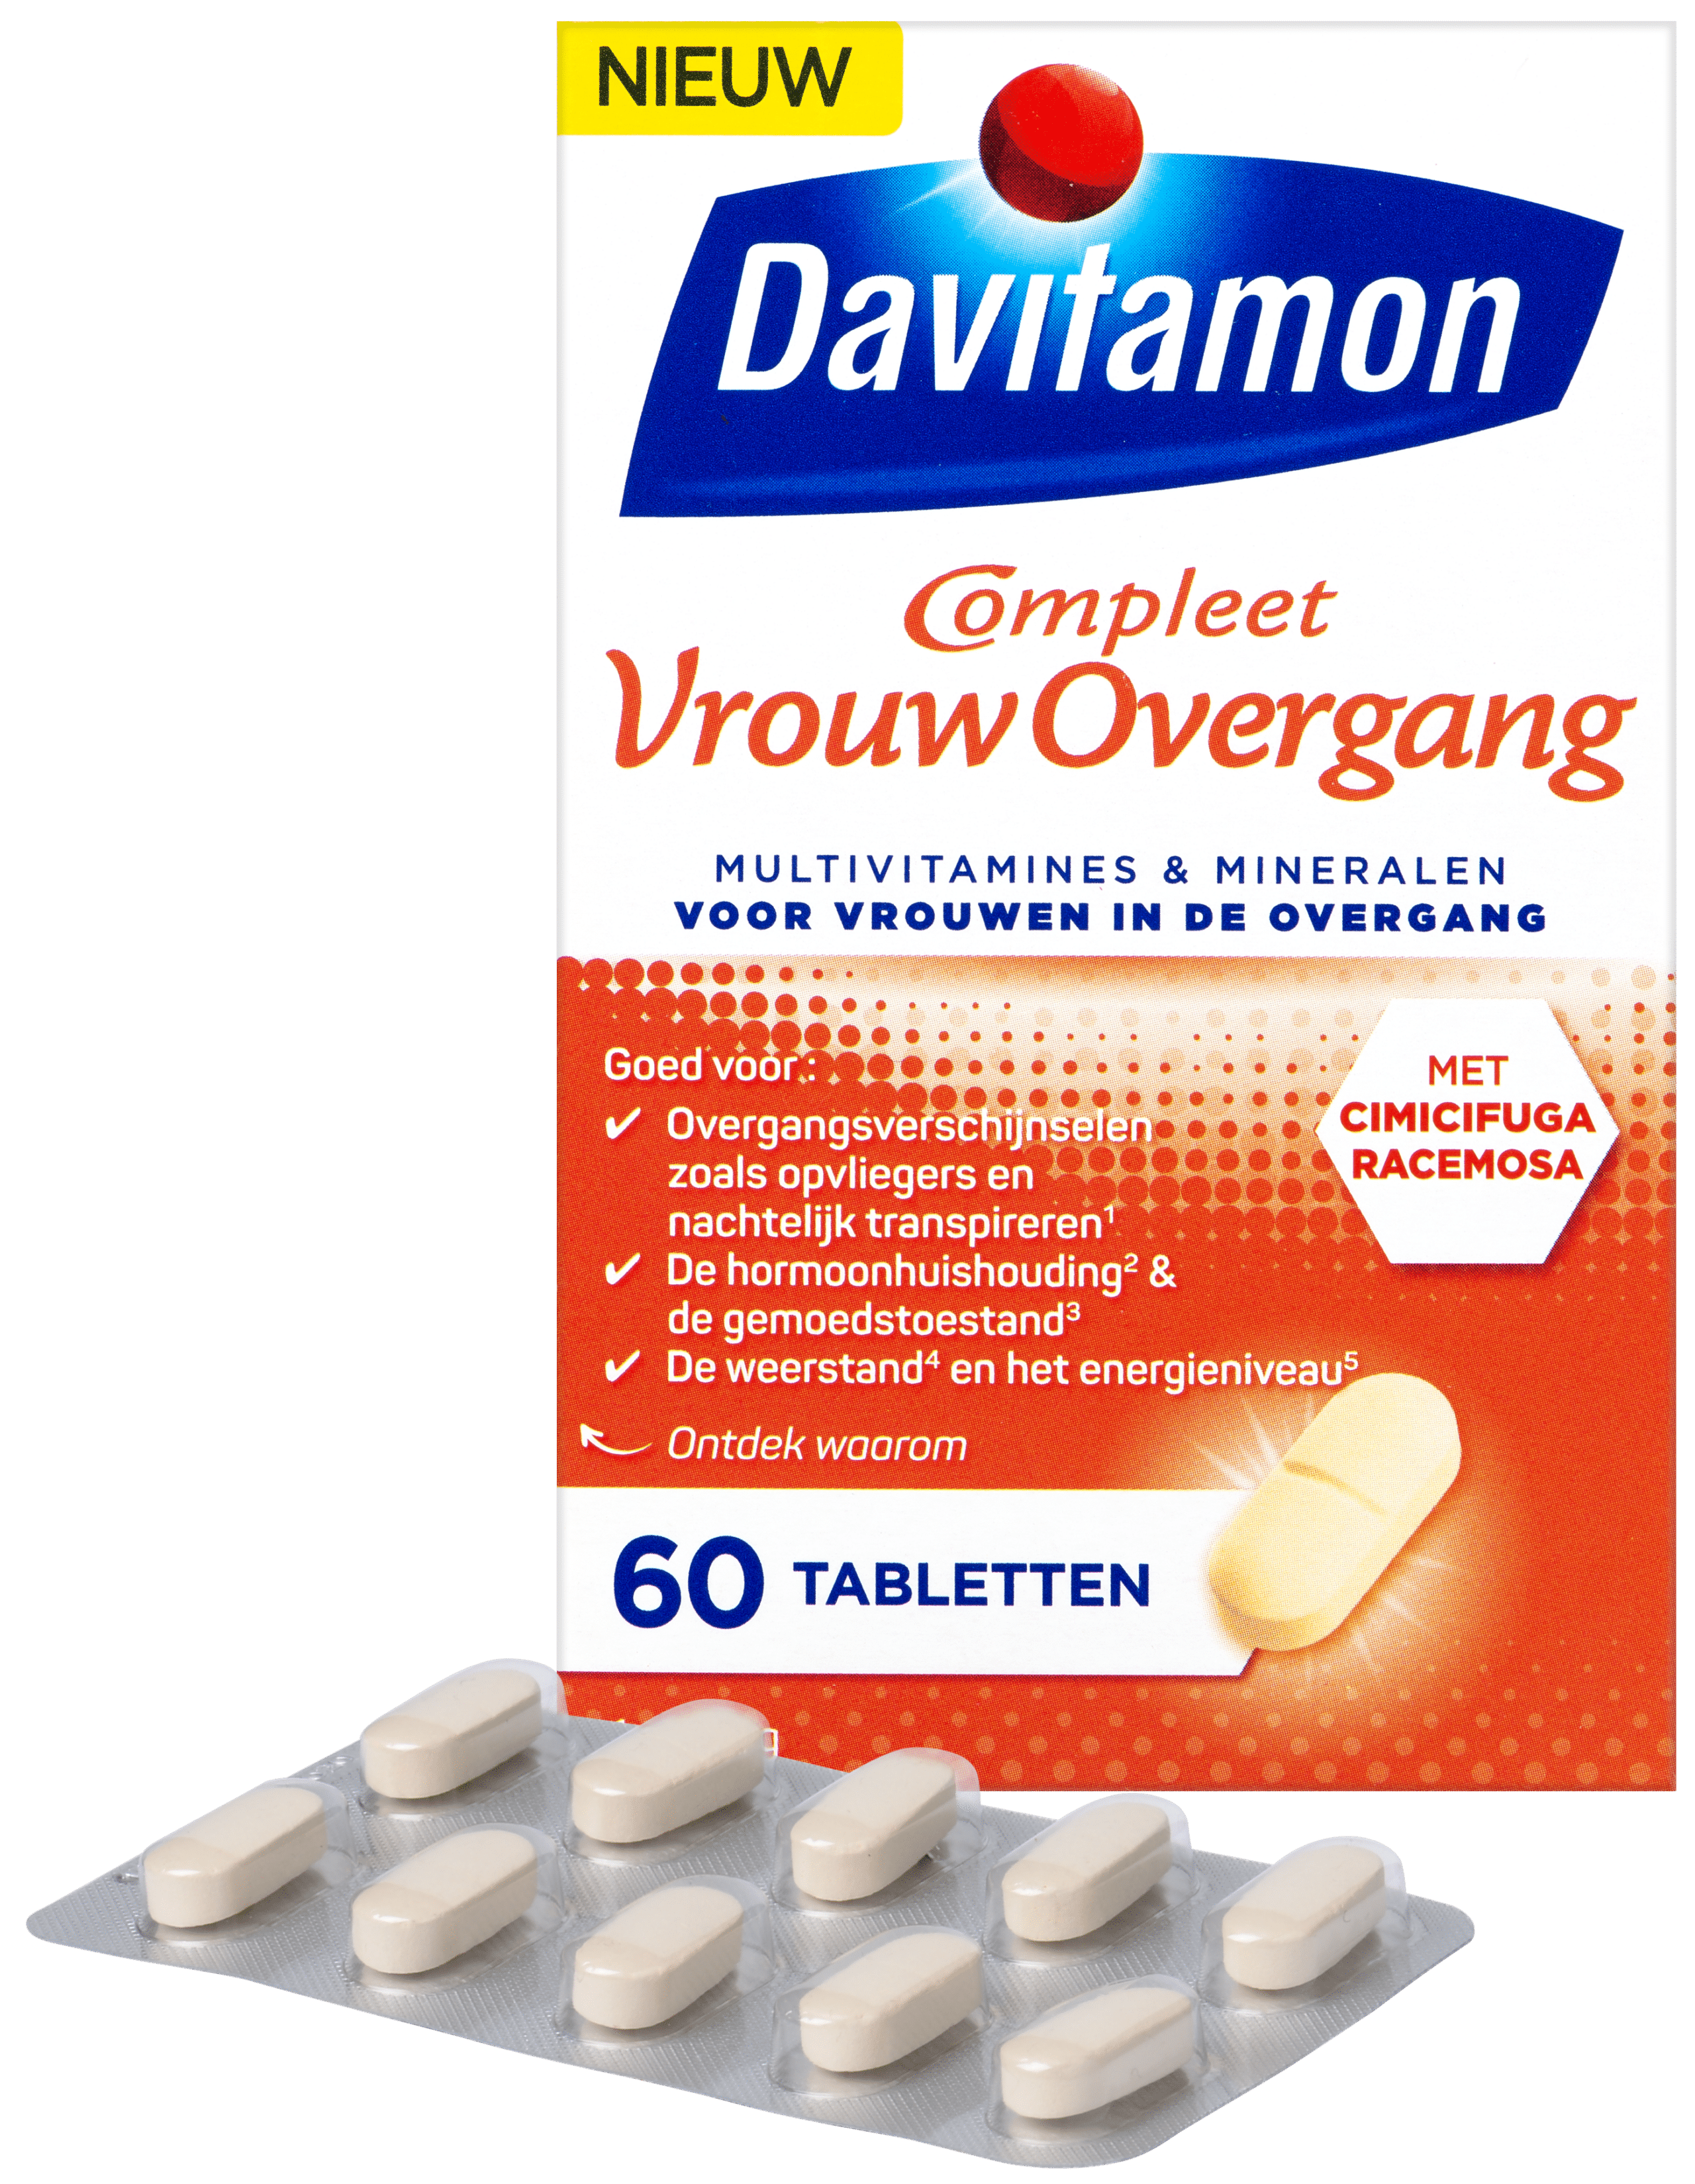 Davitamon Compleet Vrouw Overgang – <br>60 tabletten